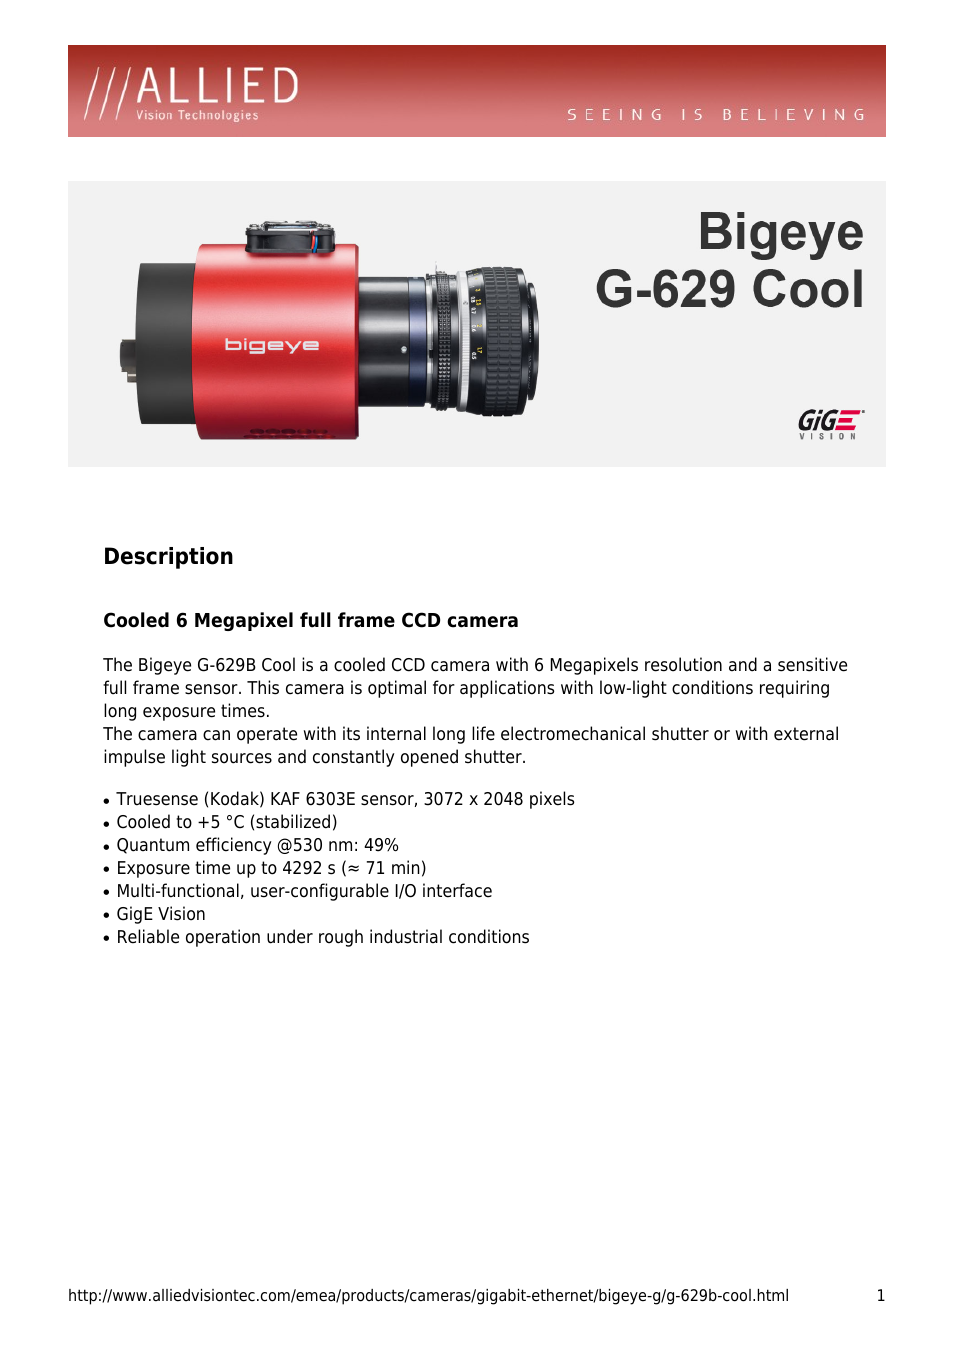 Bigeye G-629 Cool